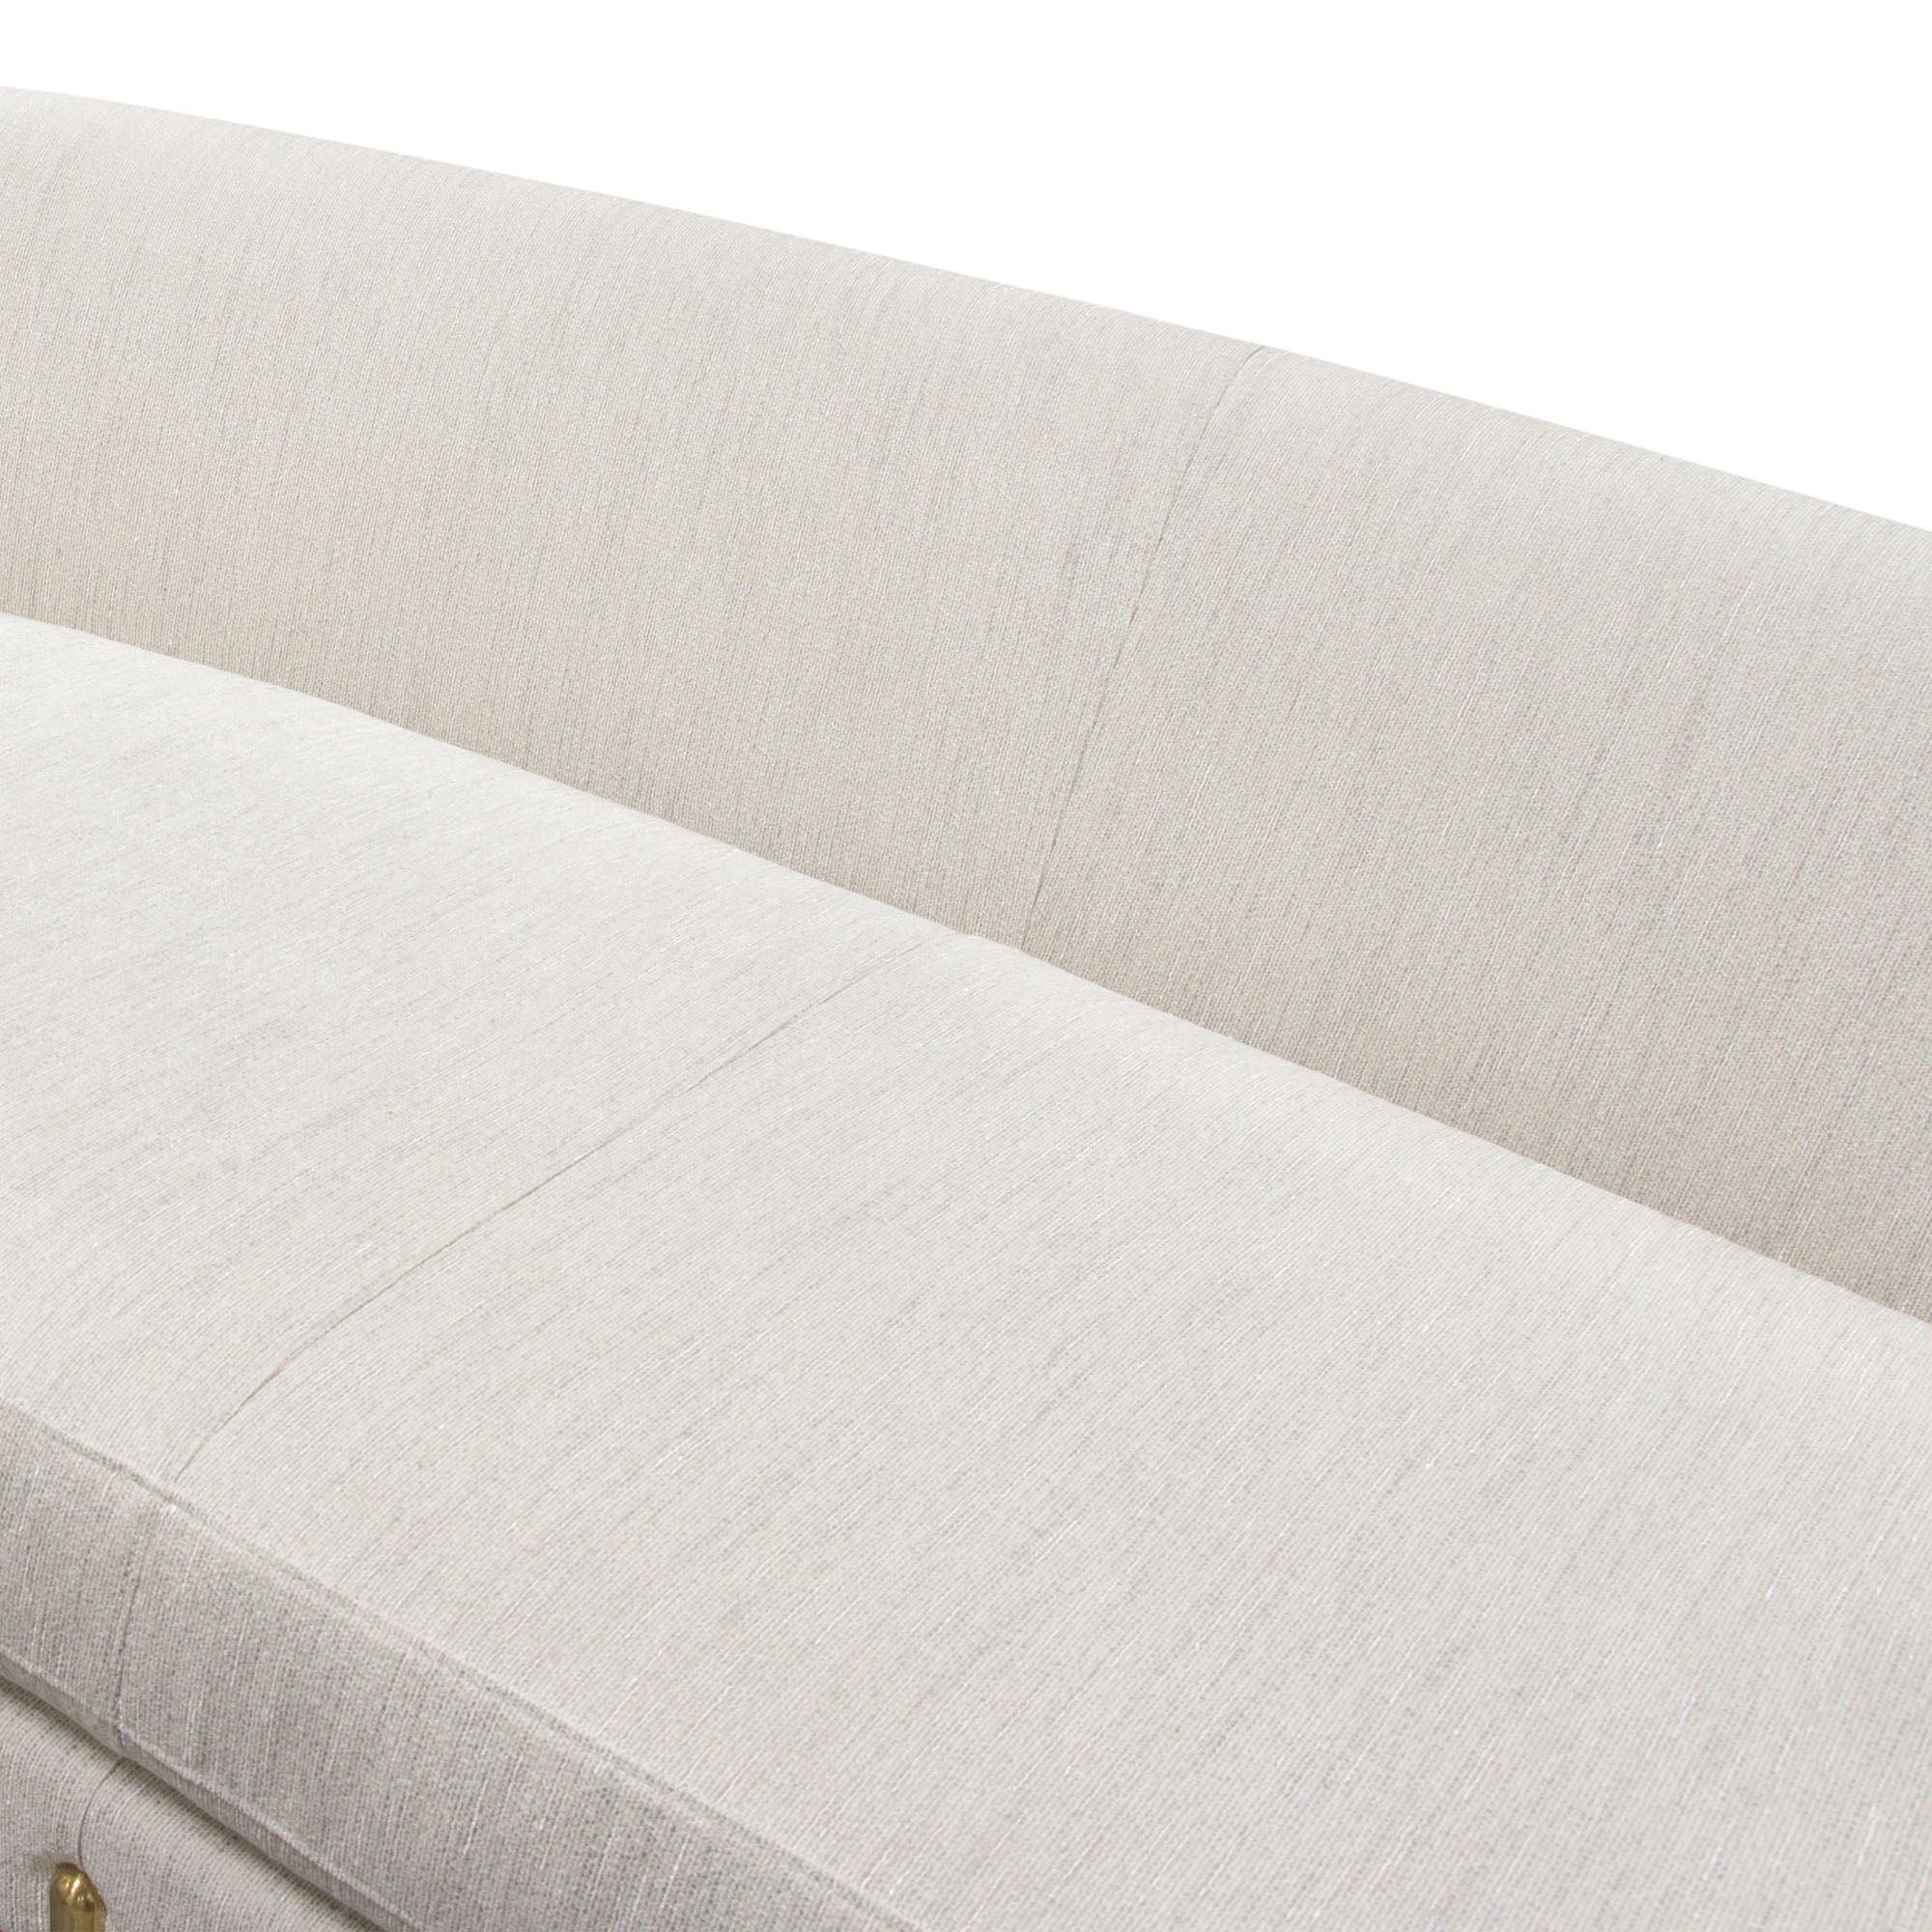 Diamond Sofa Lane Sofa in Light Cream Fabric with Gold Metal Legs